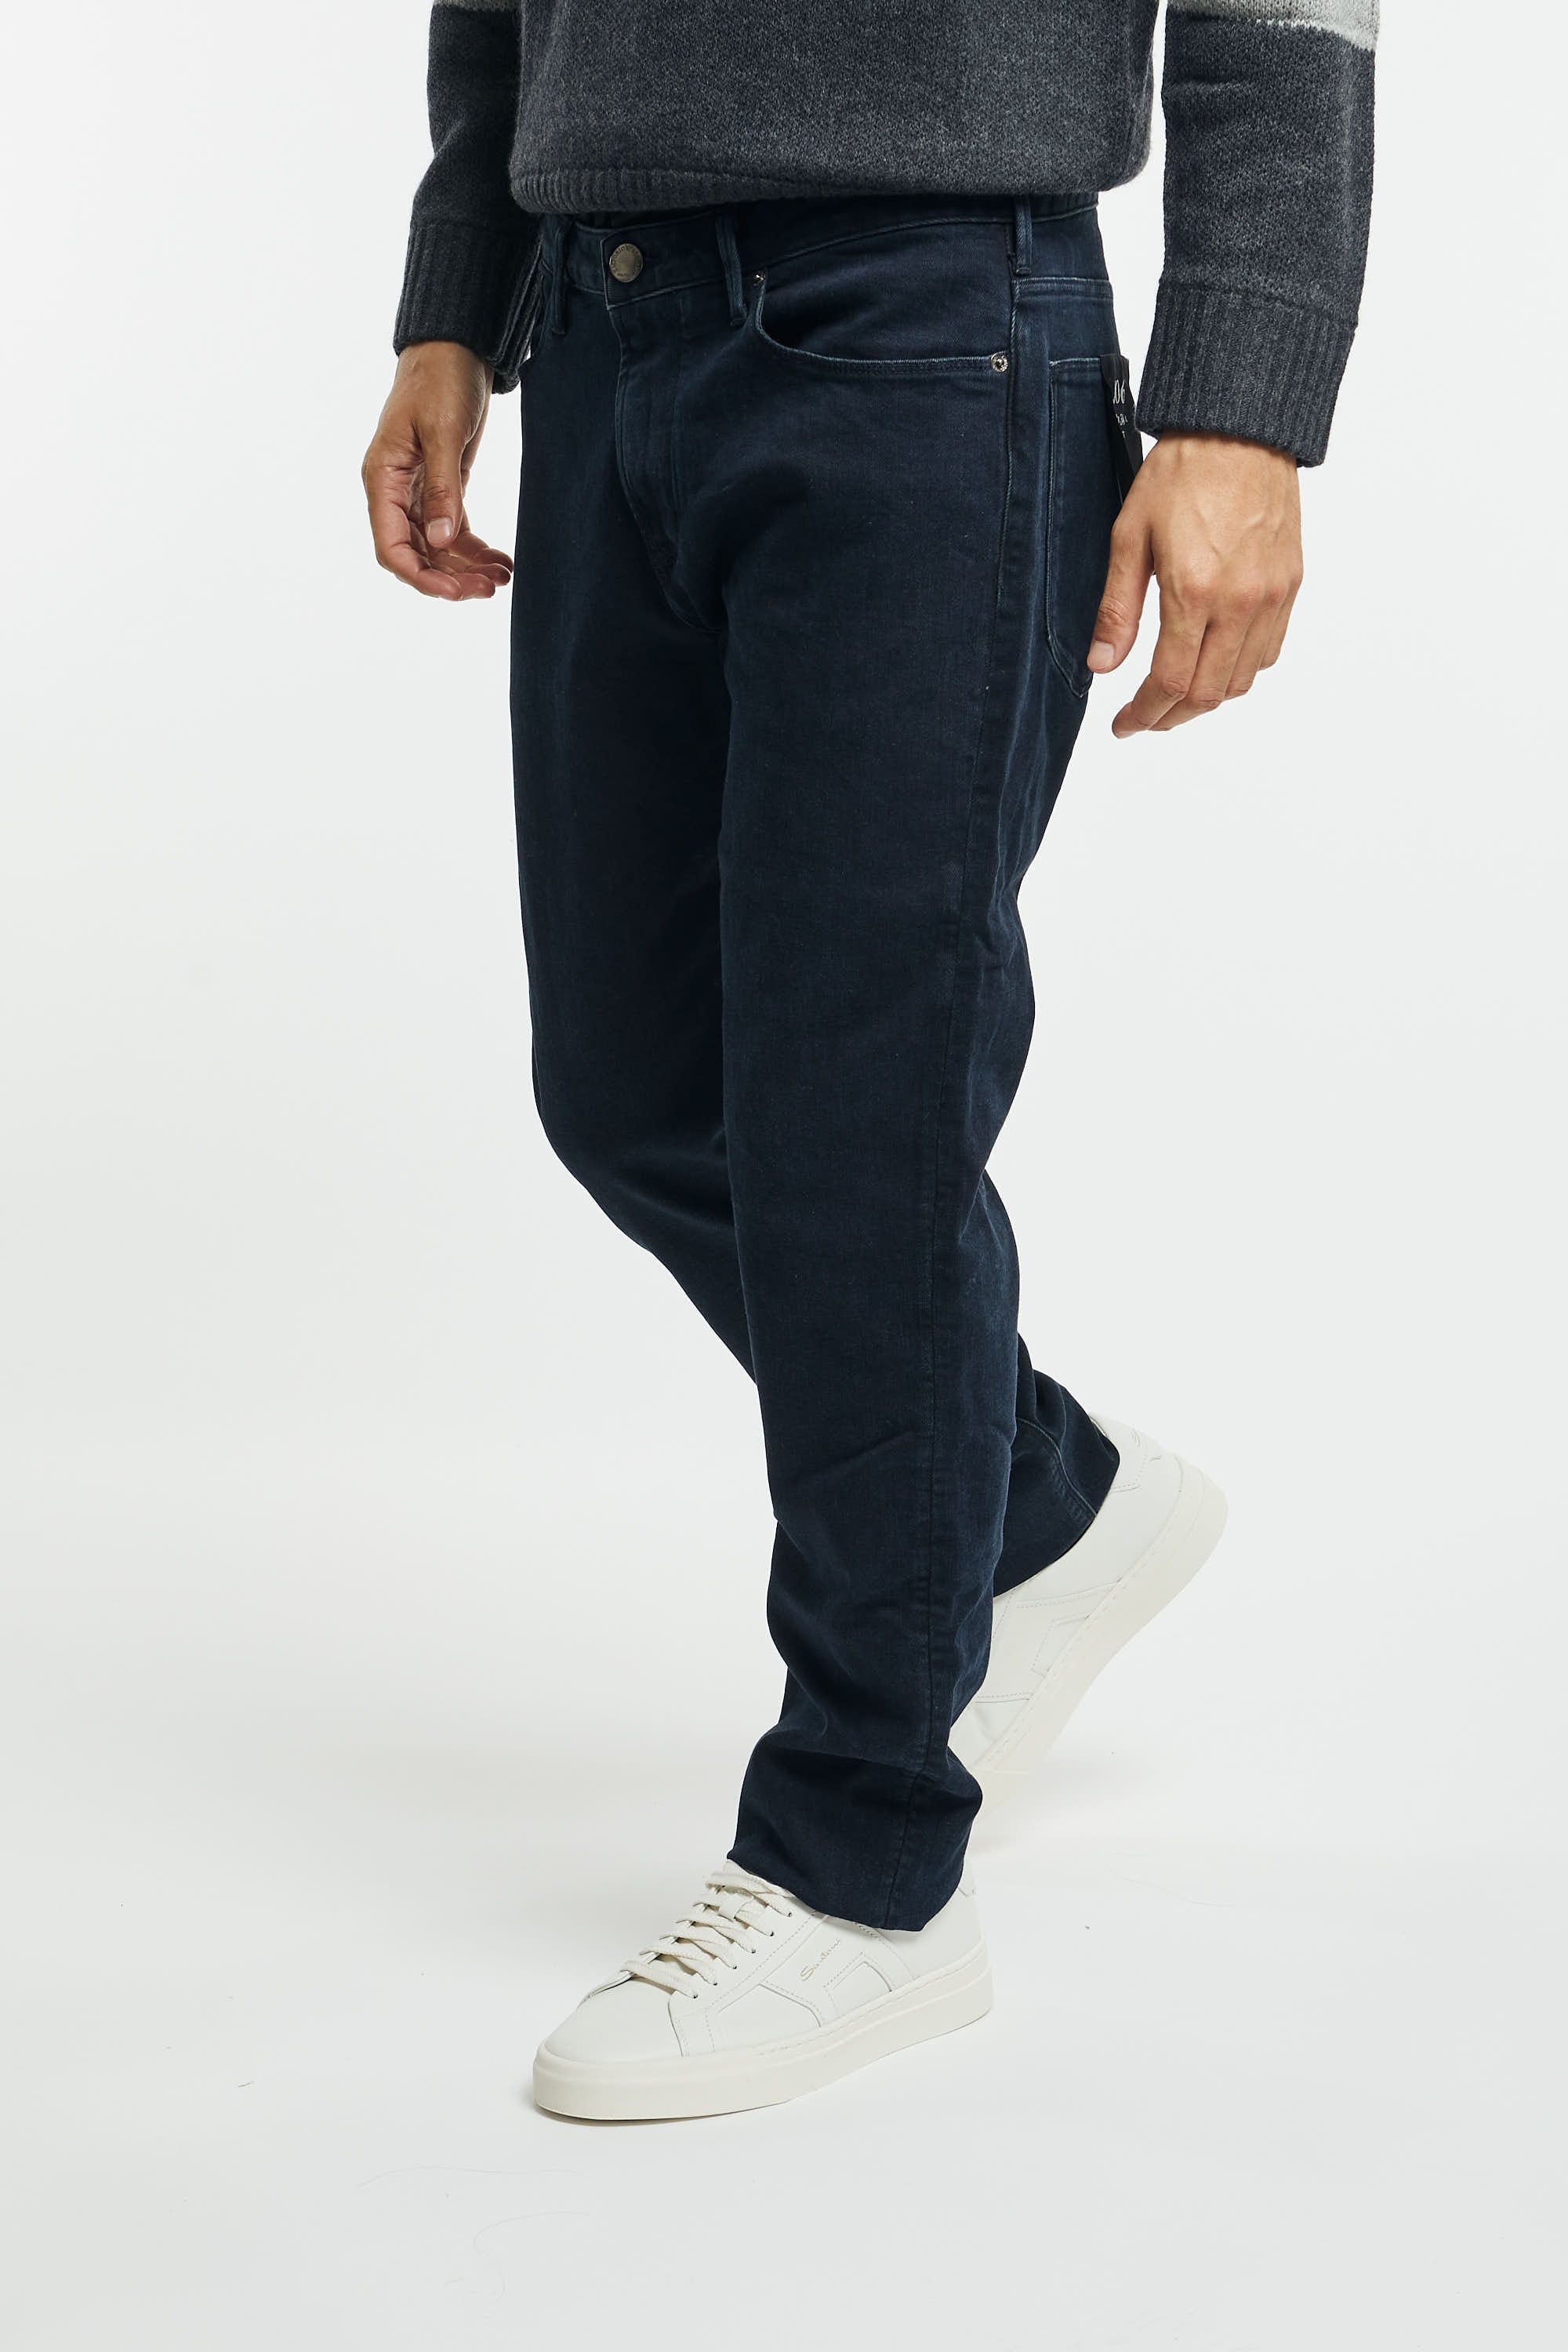 Emporio Armani Jeans J06 Slim Fit in Blue Stretch Cotton Denim-1